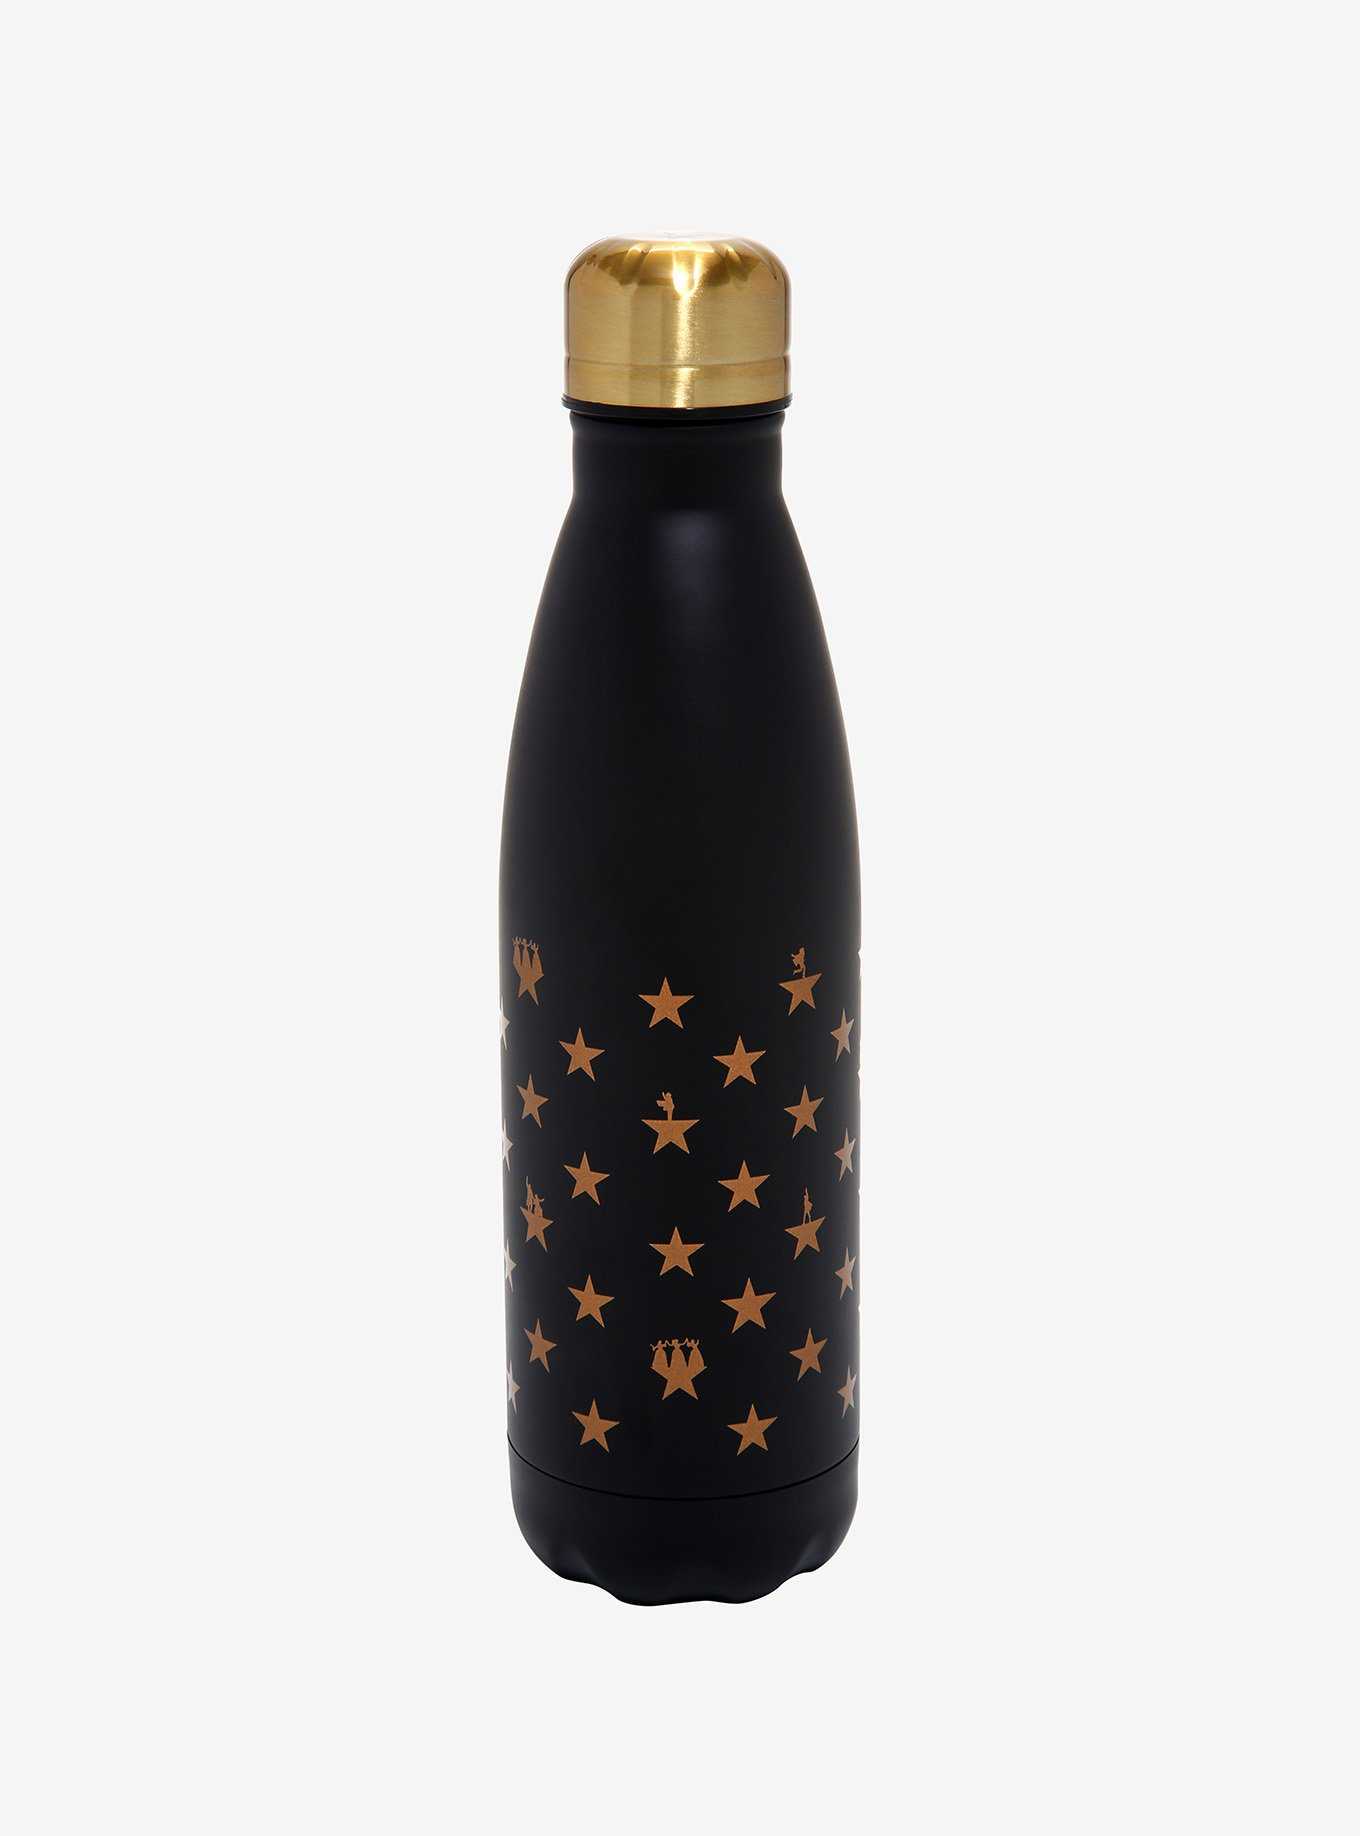 Hamilton Gold Star Water Bottle, , hi-res